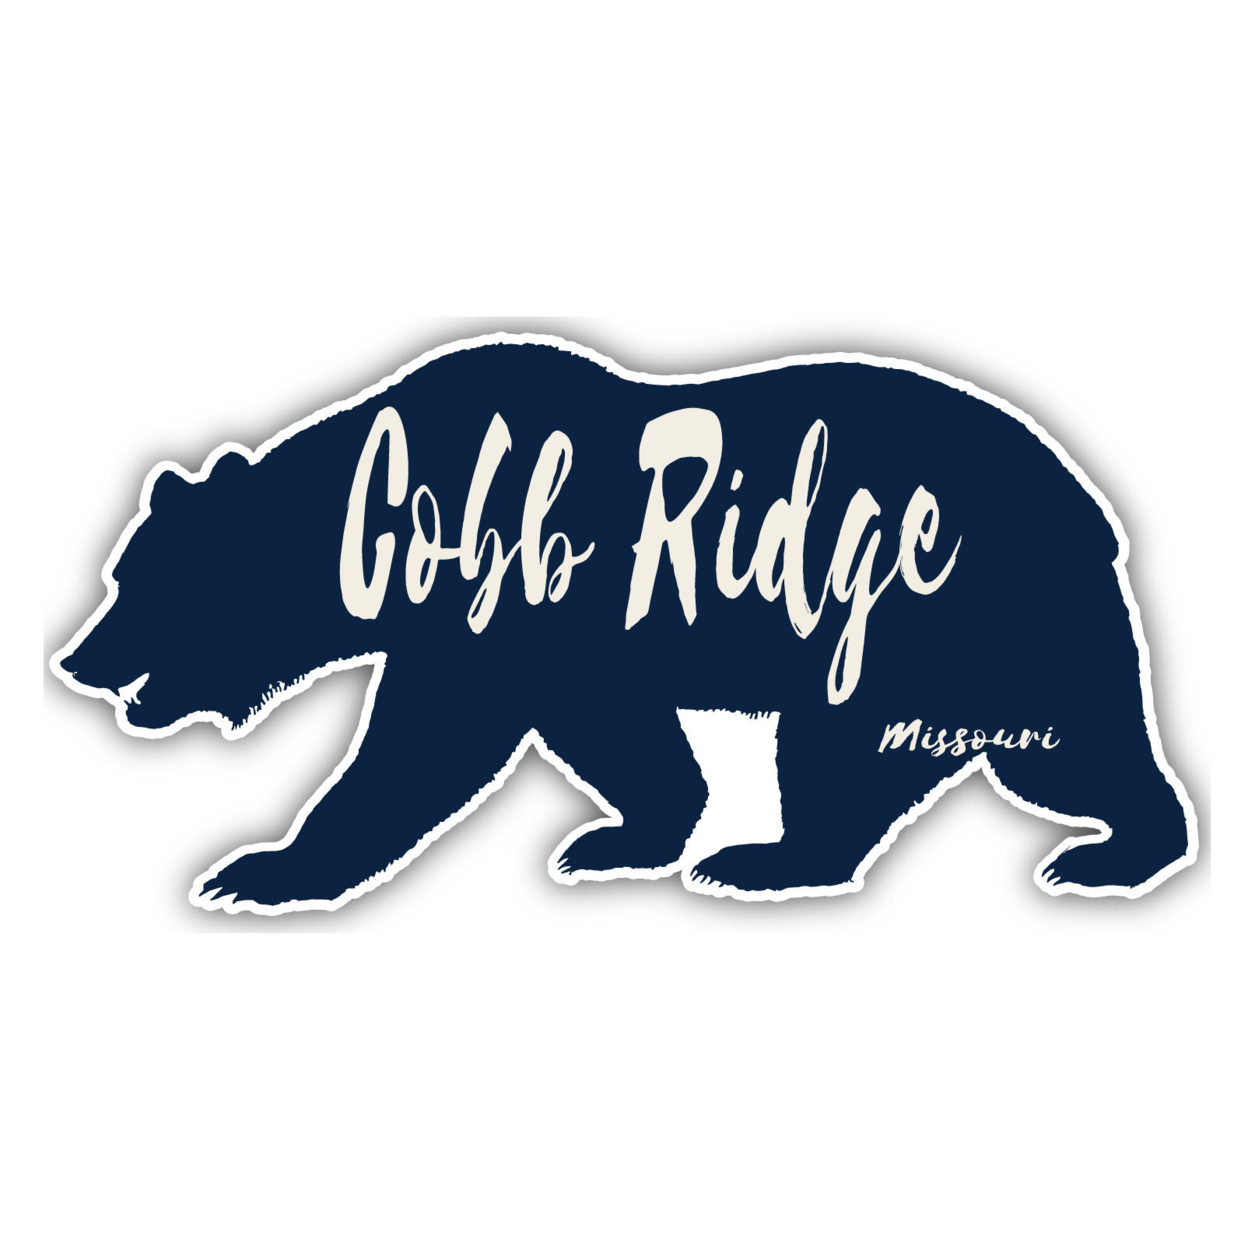 Cobb Ridge Missouri Souvenir Decorative Stickers (Choose Theme And Size) - Single Unit, 8-Inch, Bear